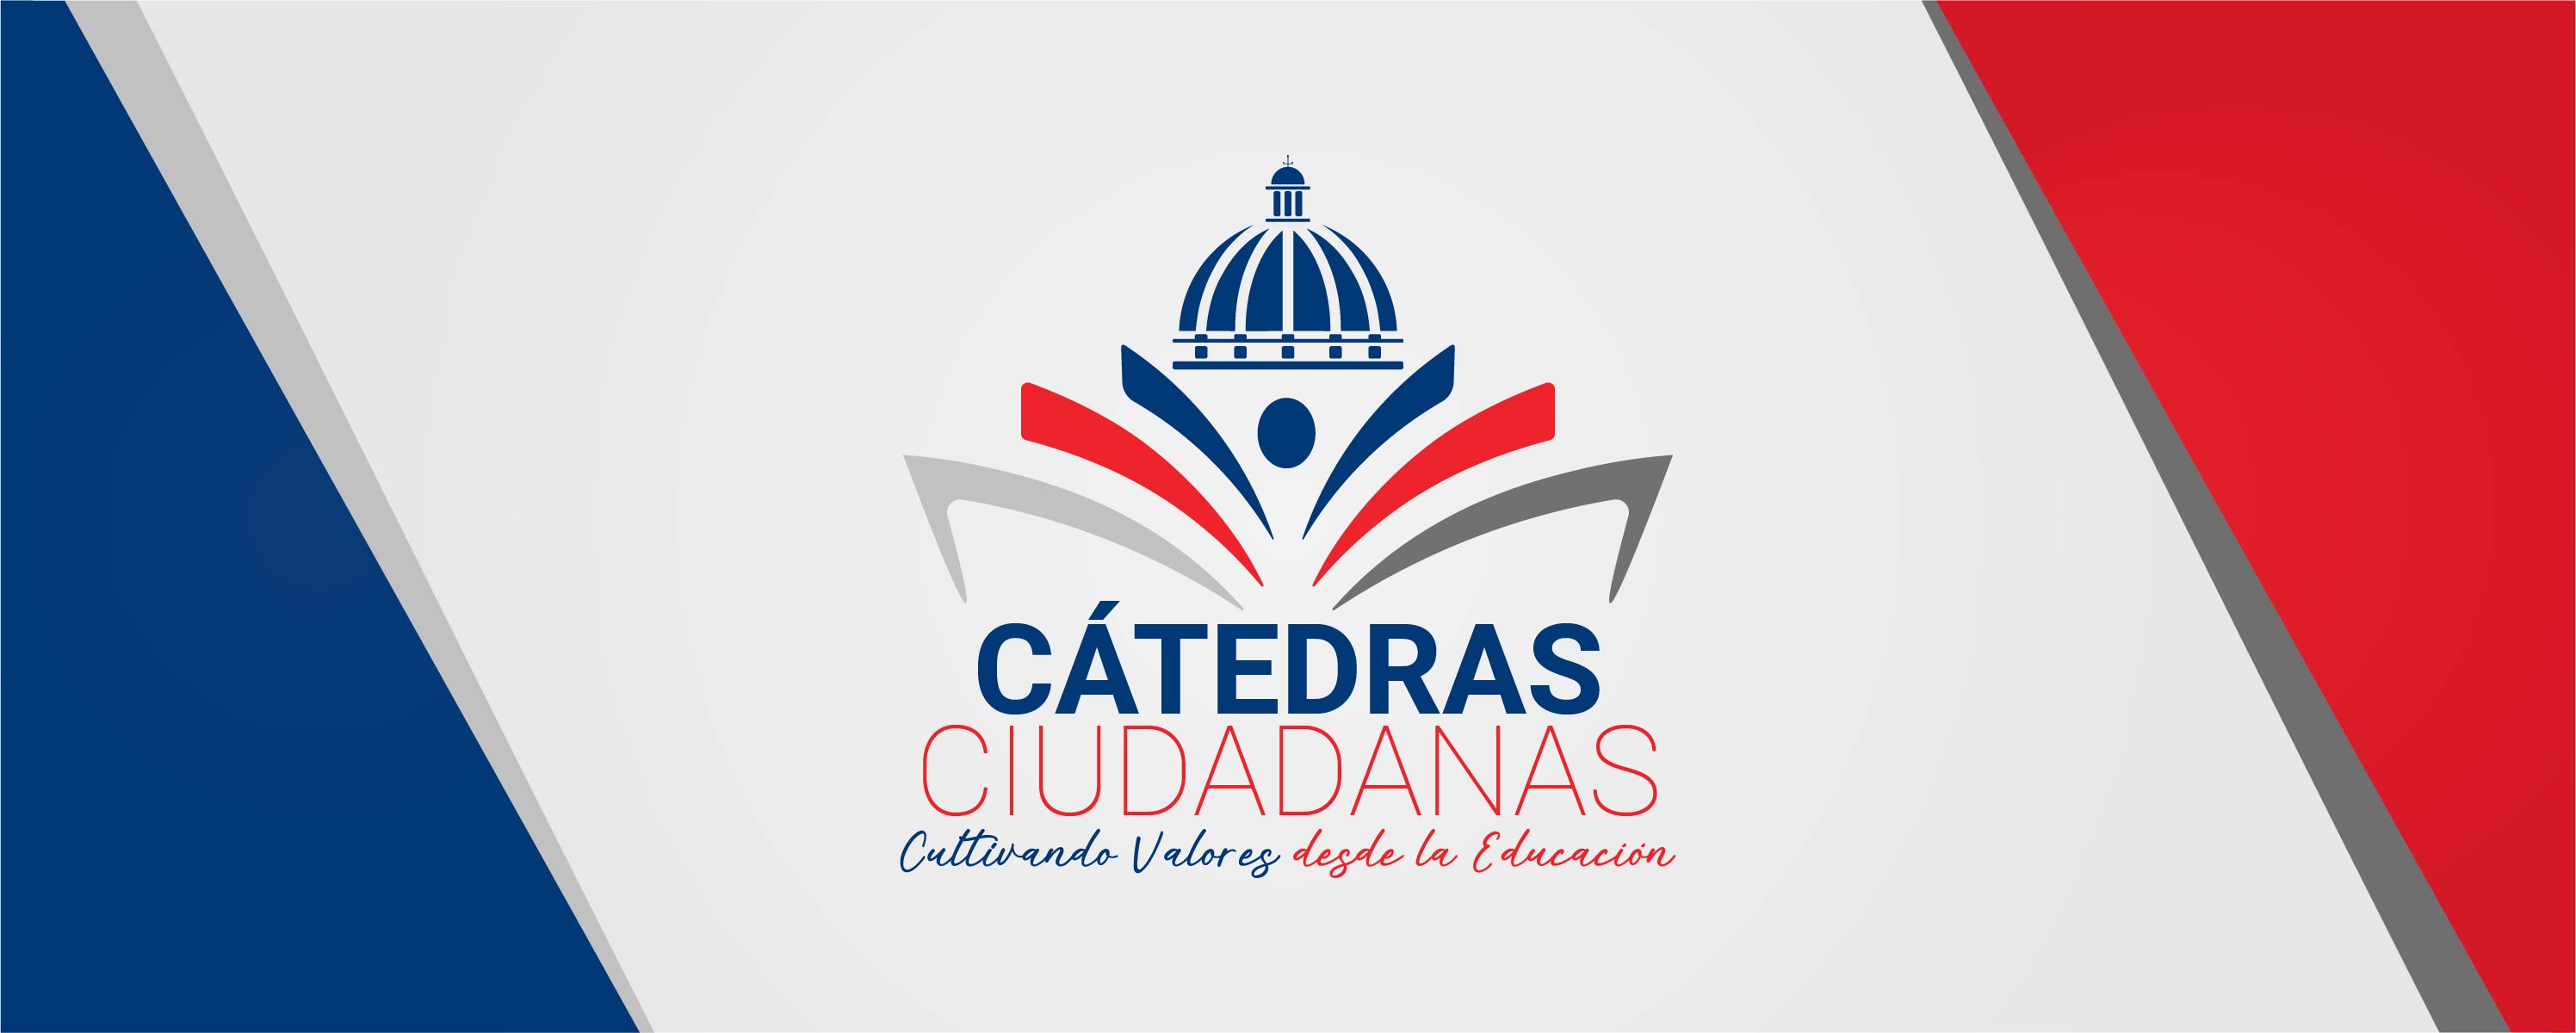 Catedras CIudadanas 